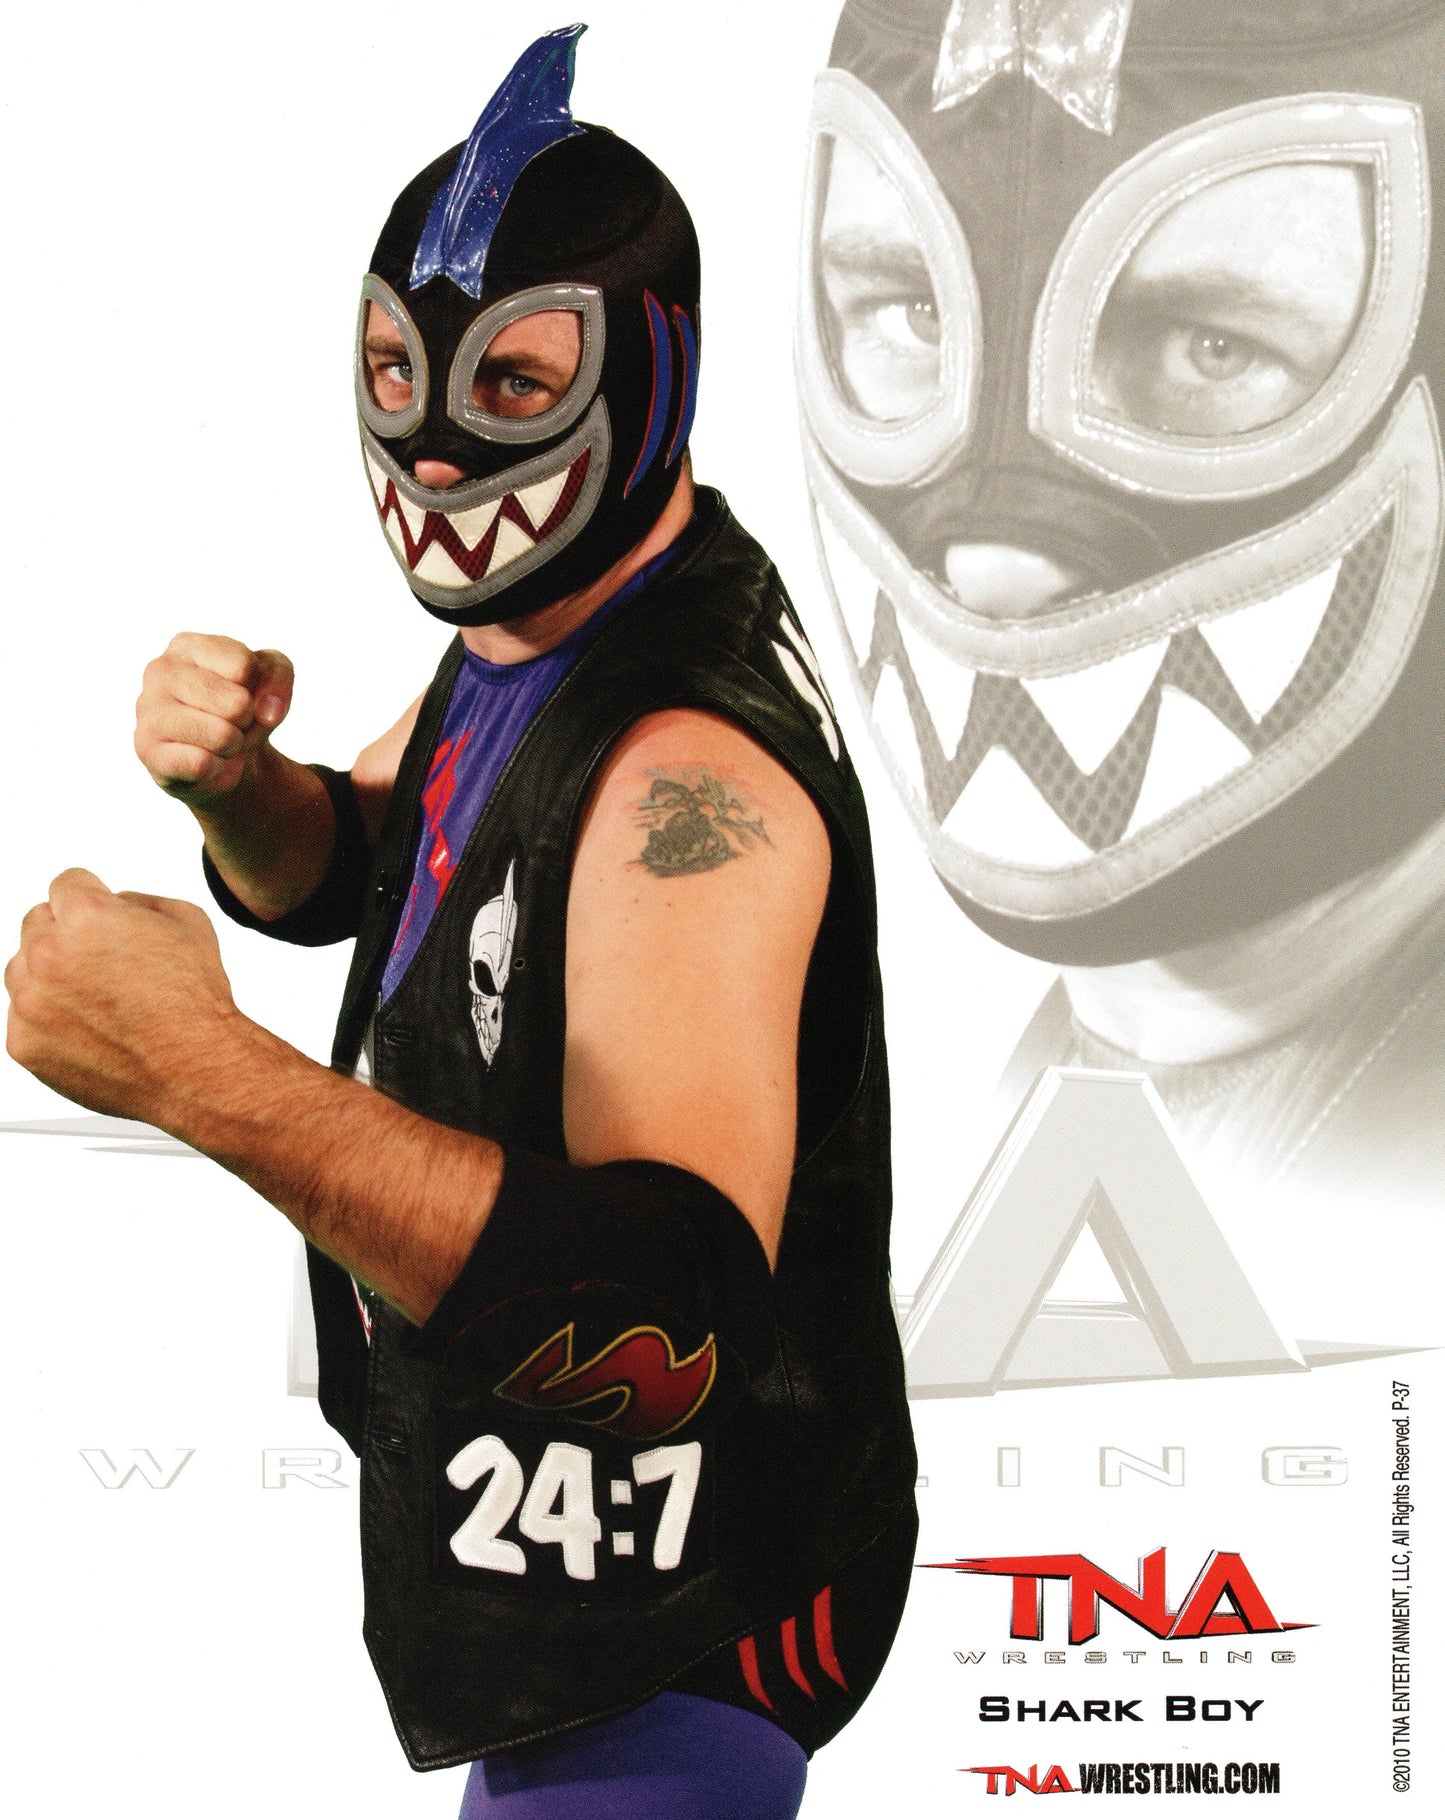 Shark Boy TNA 8x10" Promo Photo P-37